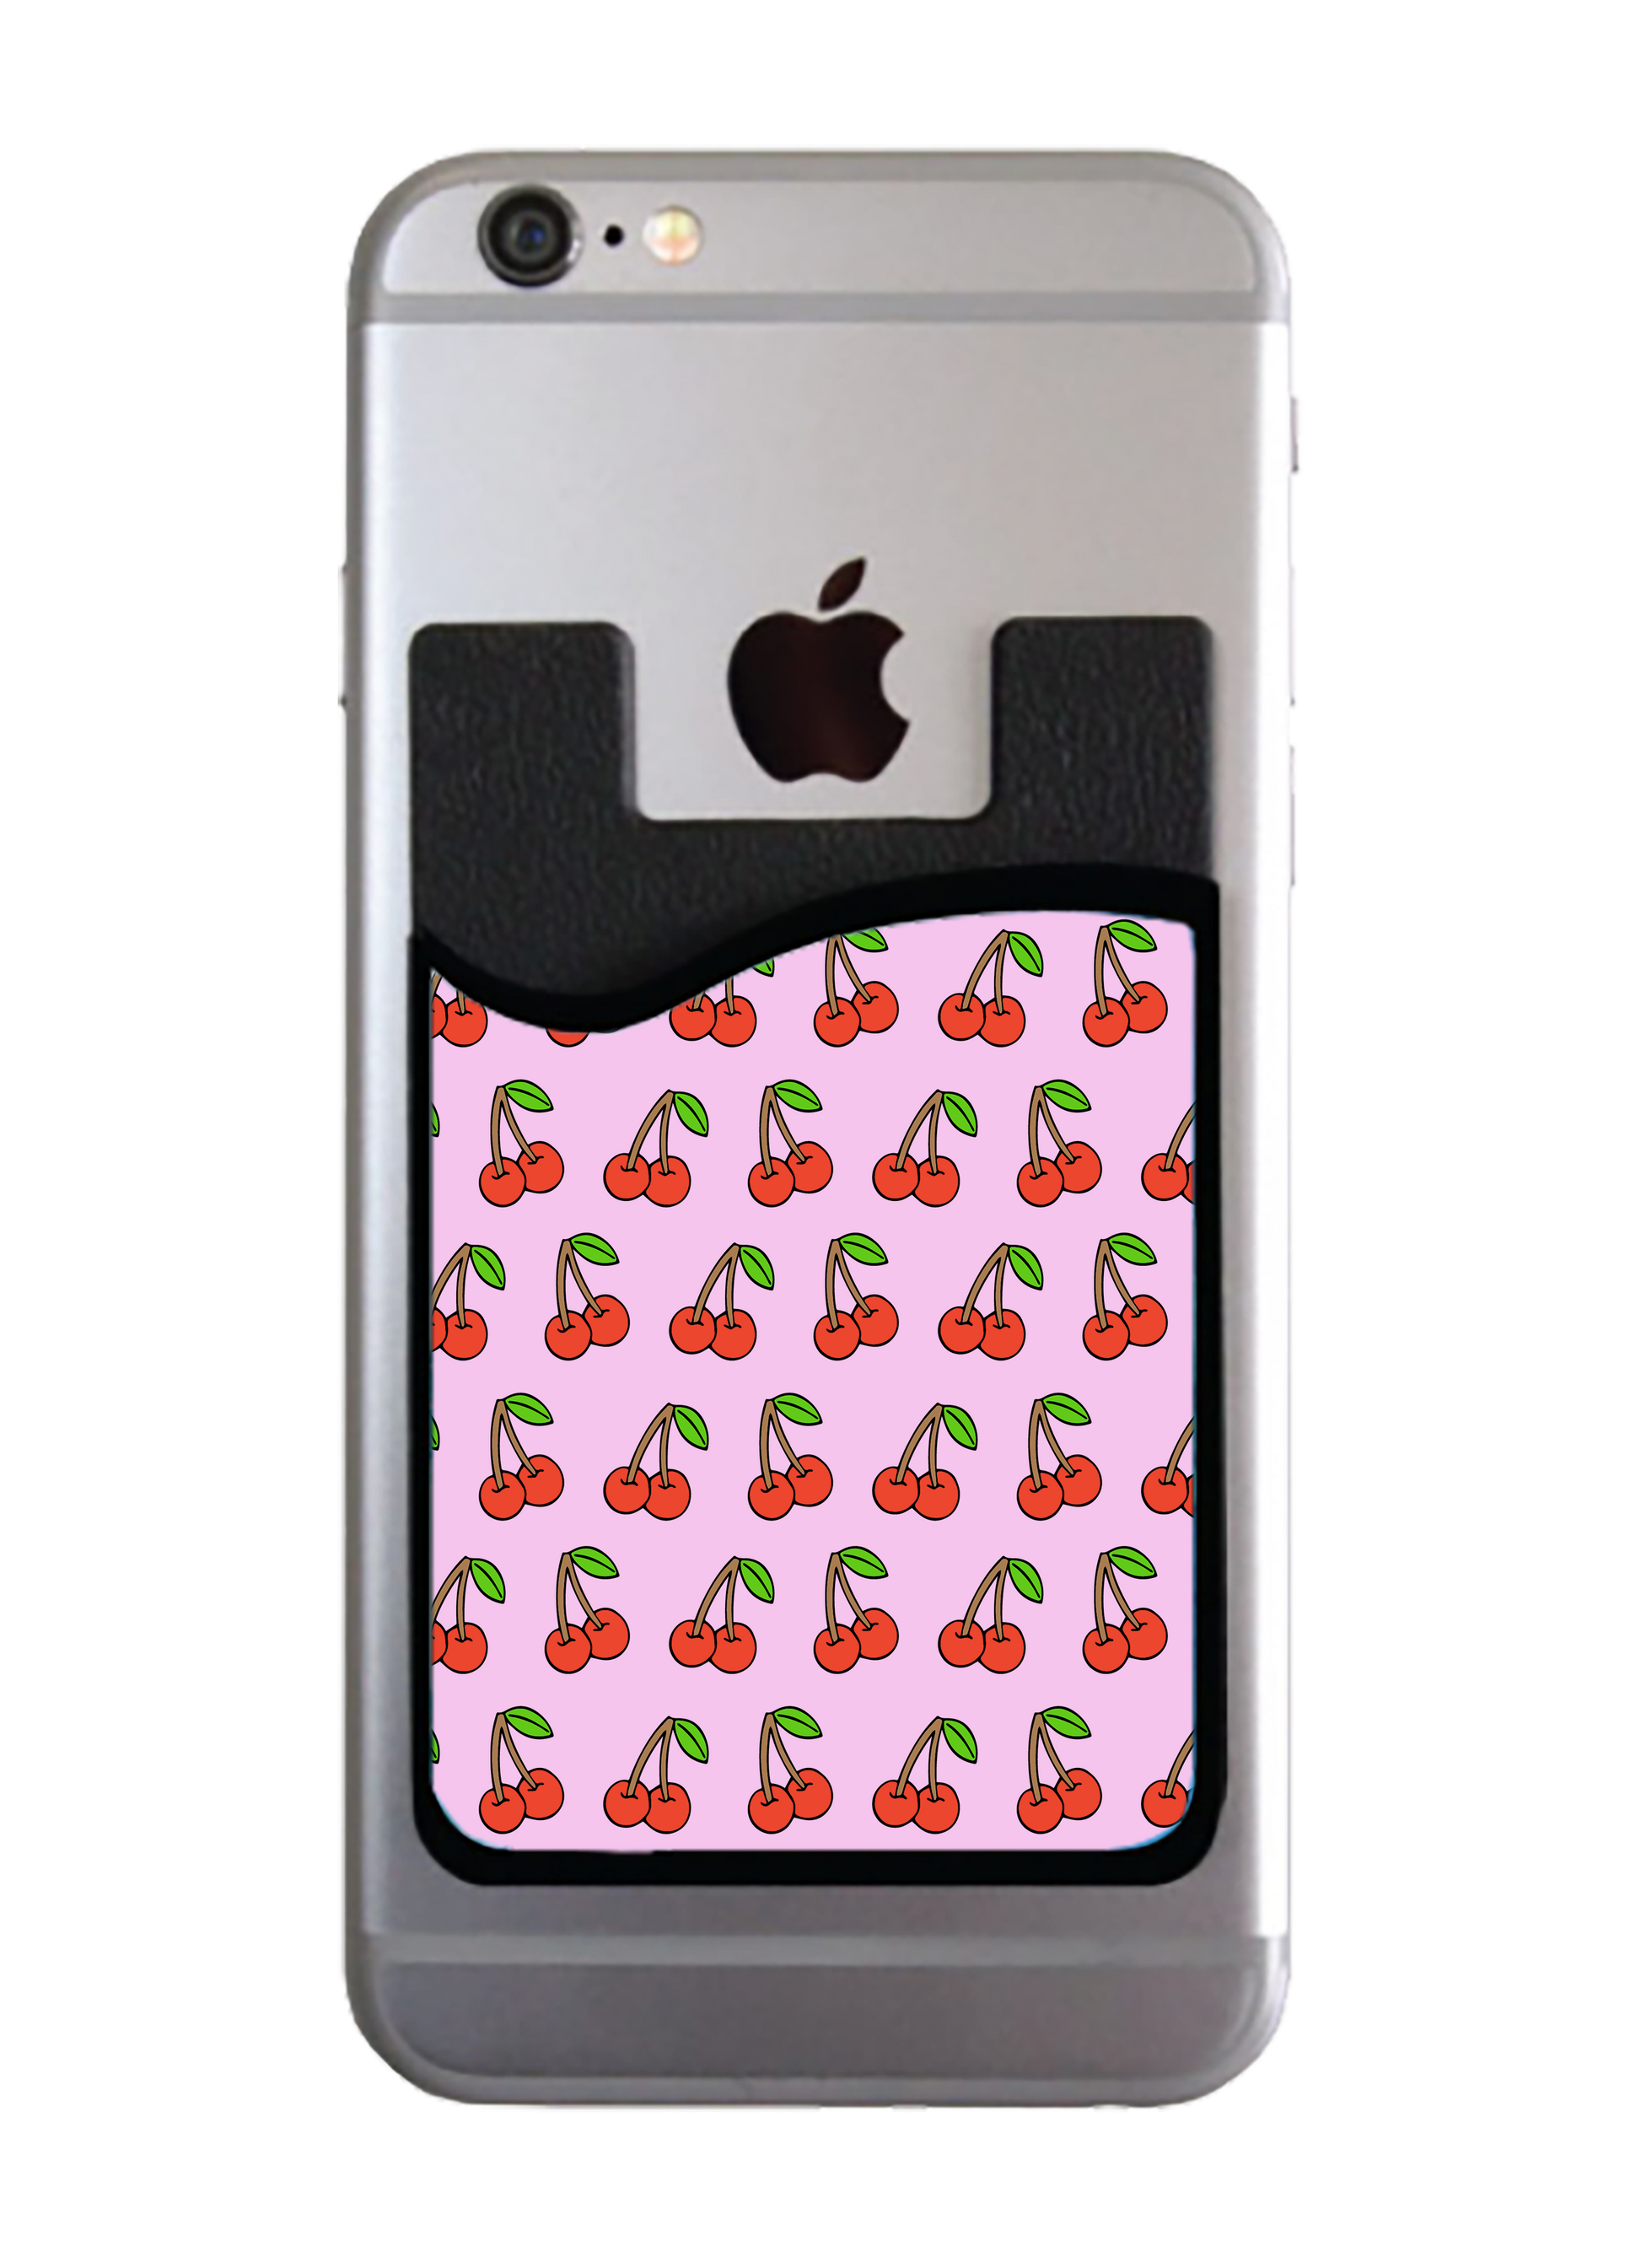 Cherries - Pink Card Caddy